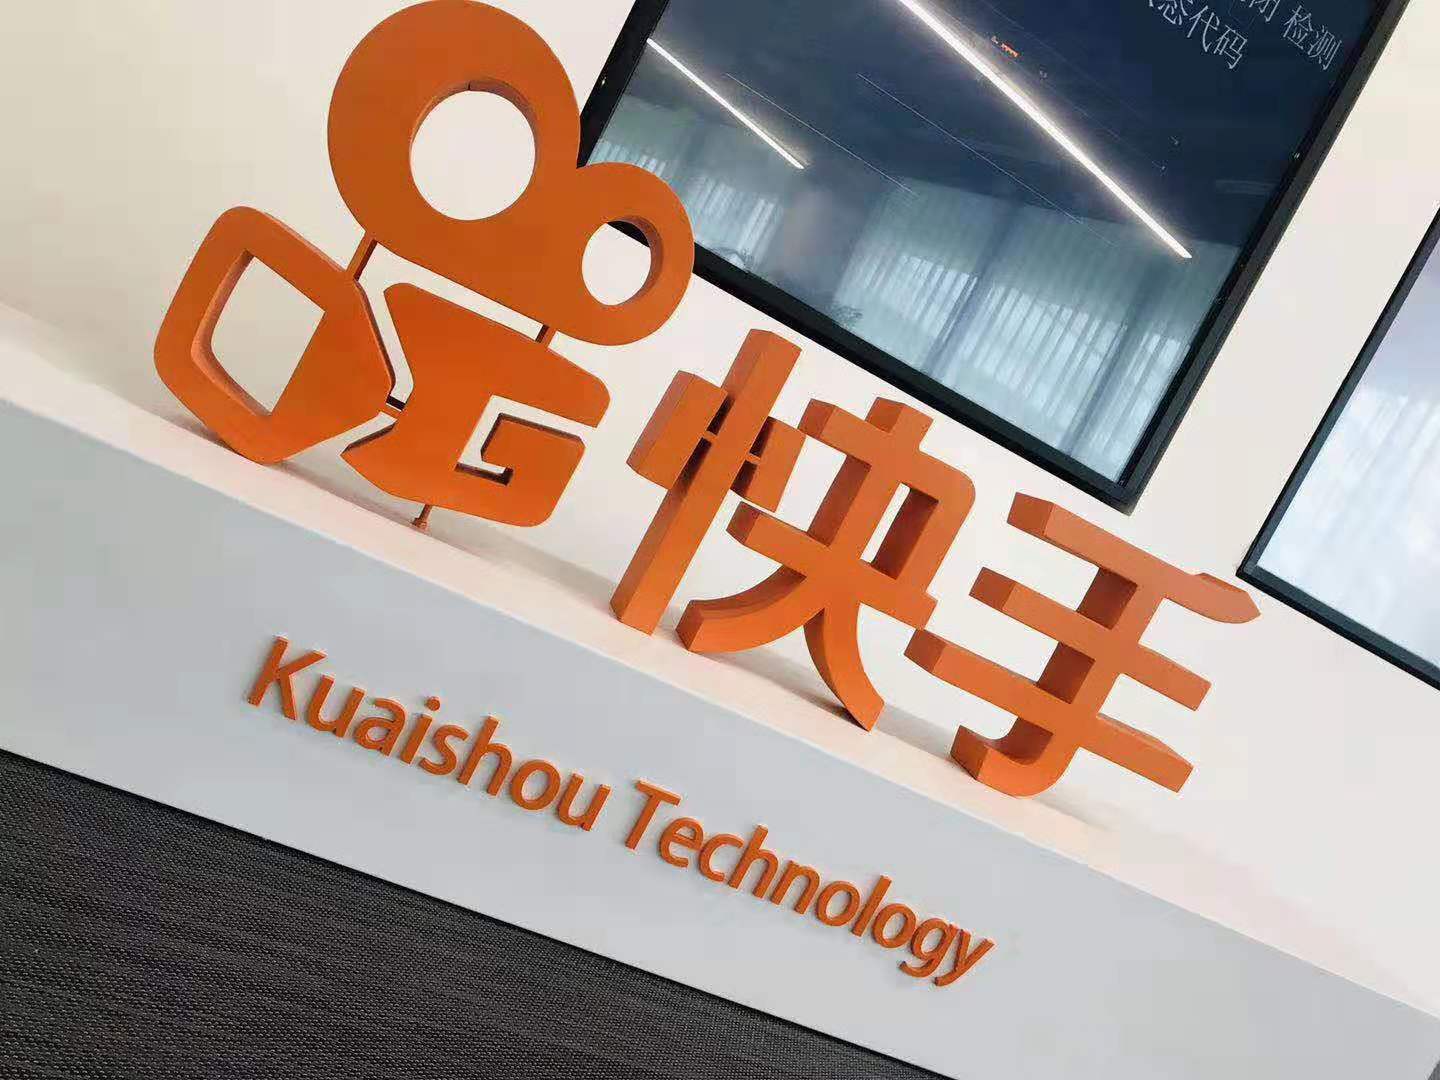 Kuaishou kicks off cross-border sales to boost growing e-commerce presence